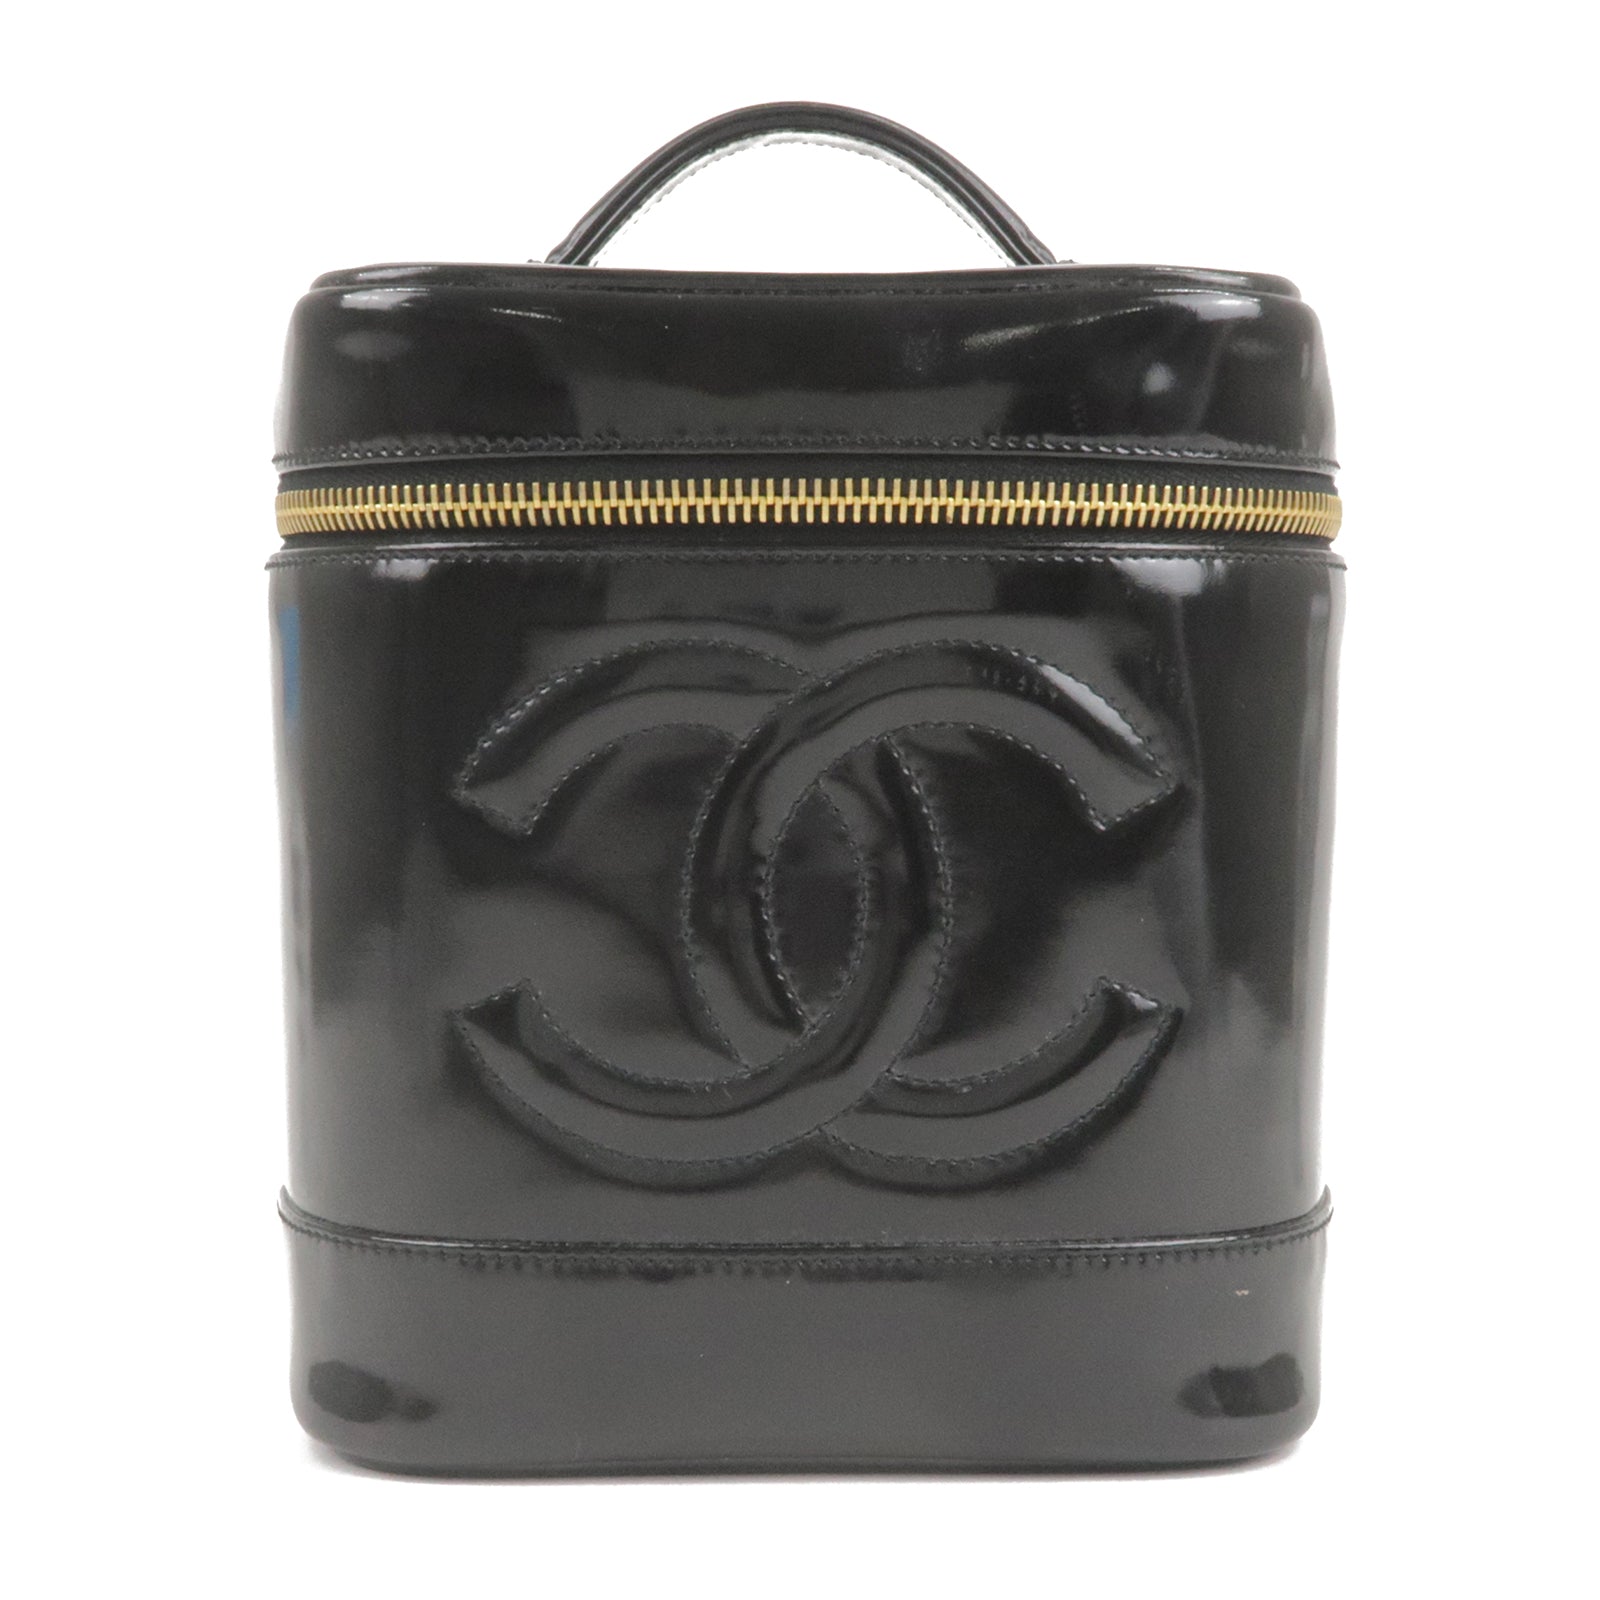 CHANEL-Enamel-Vanity-Bag-Hand-Bag-Cosmetic-Bag-Black-A01998